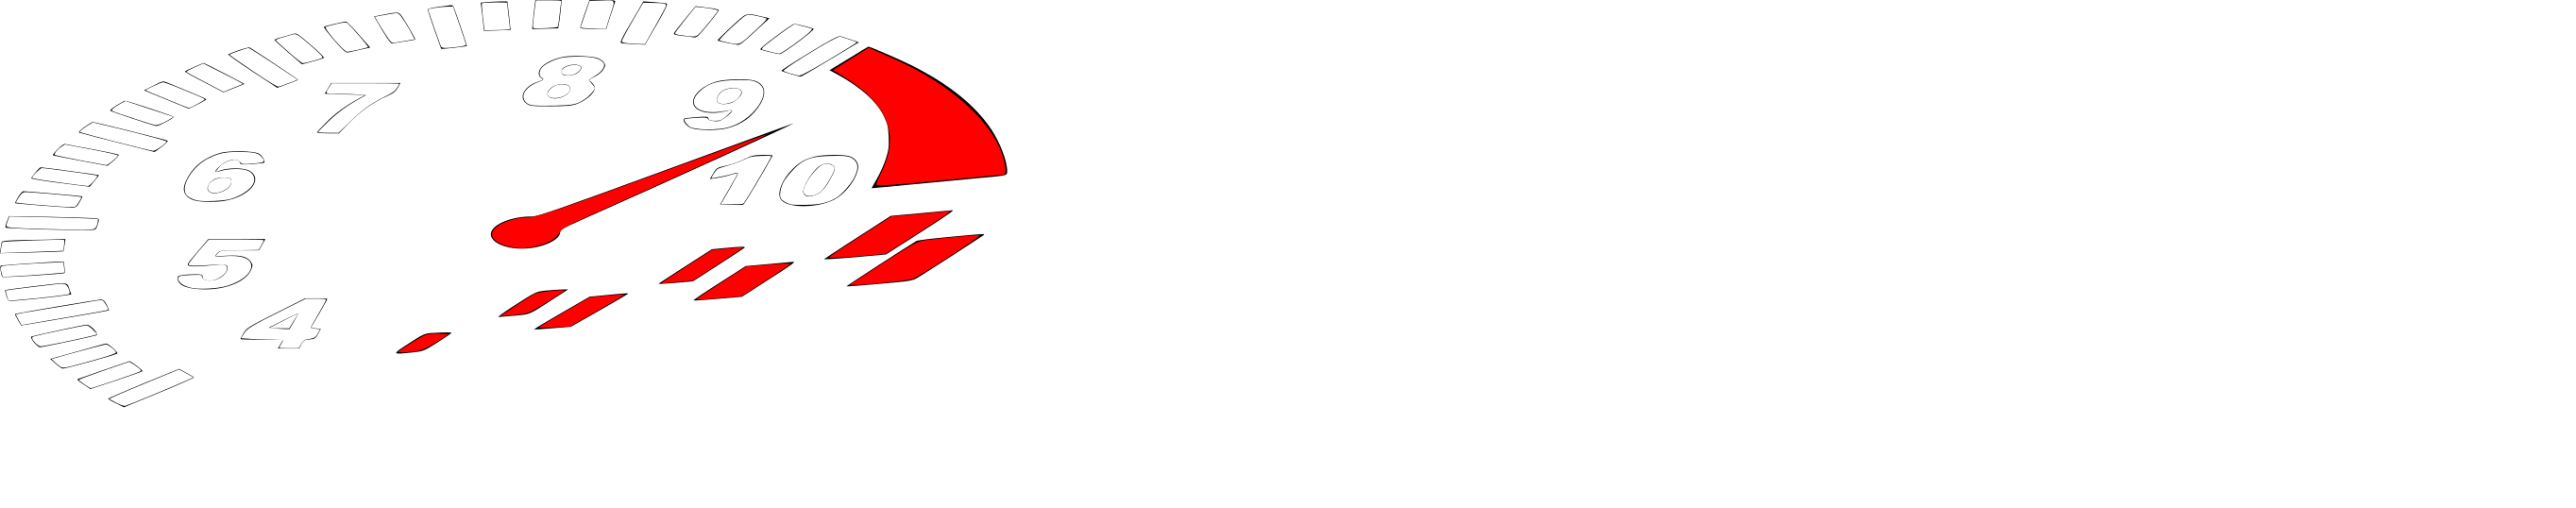 Rcm Logo Roblox